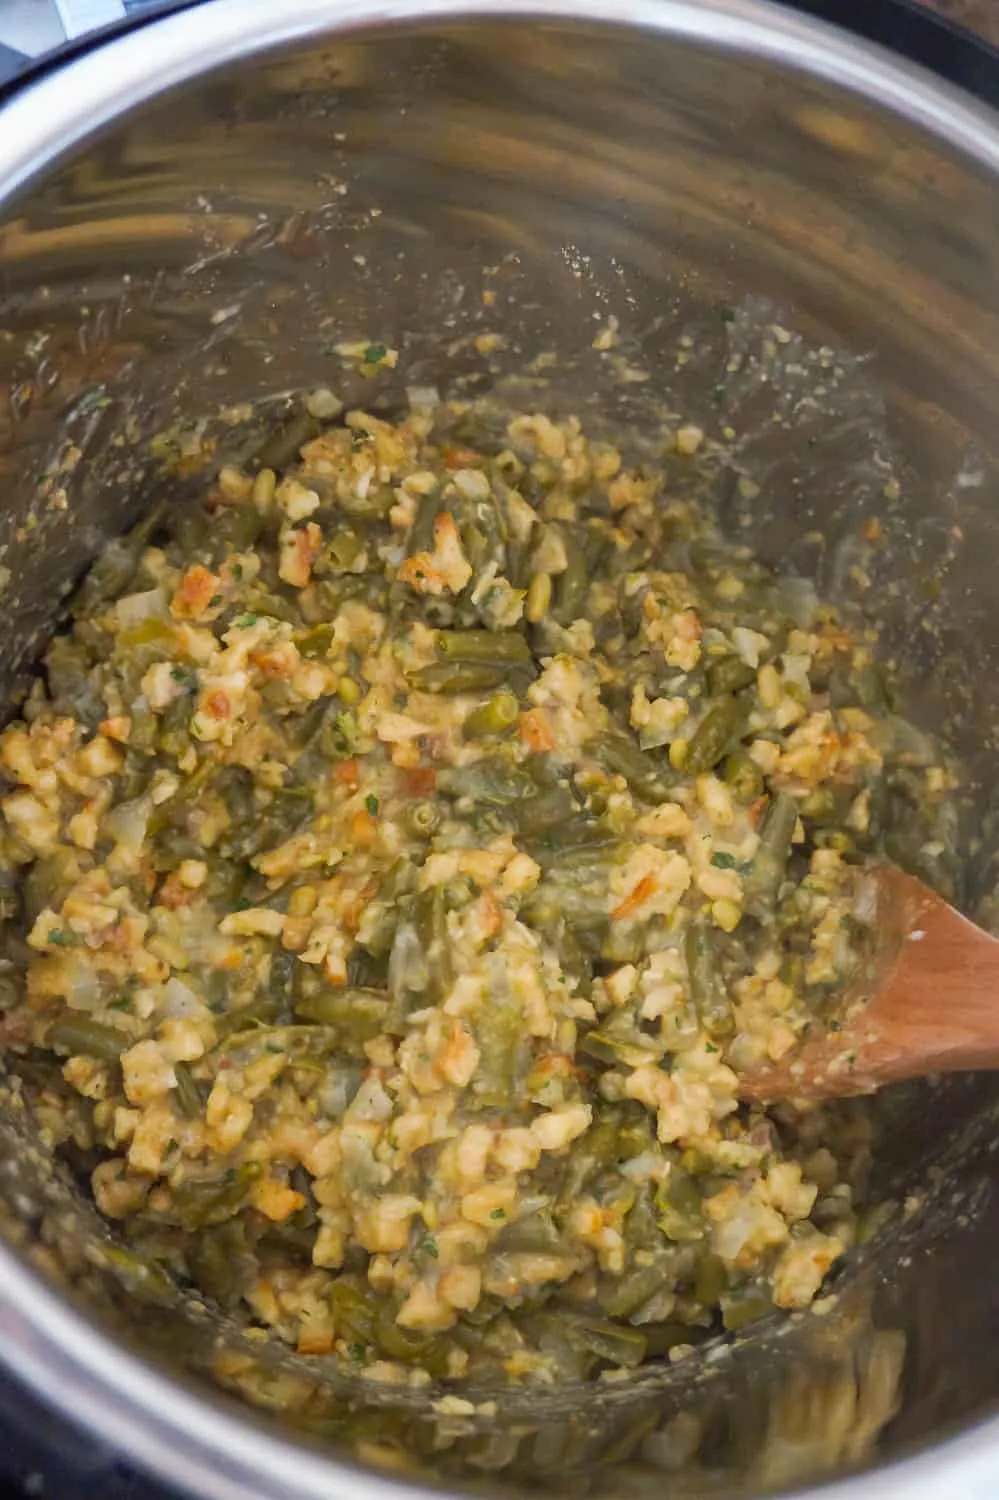 stove top stuff mix stirred into green bean casserole